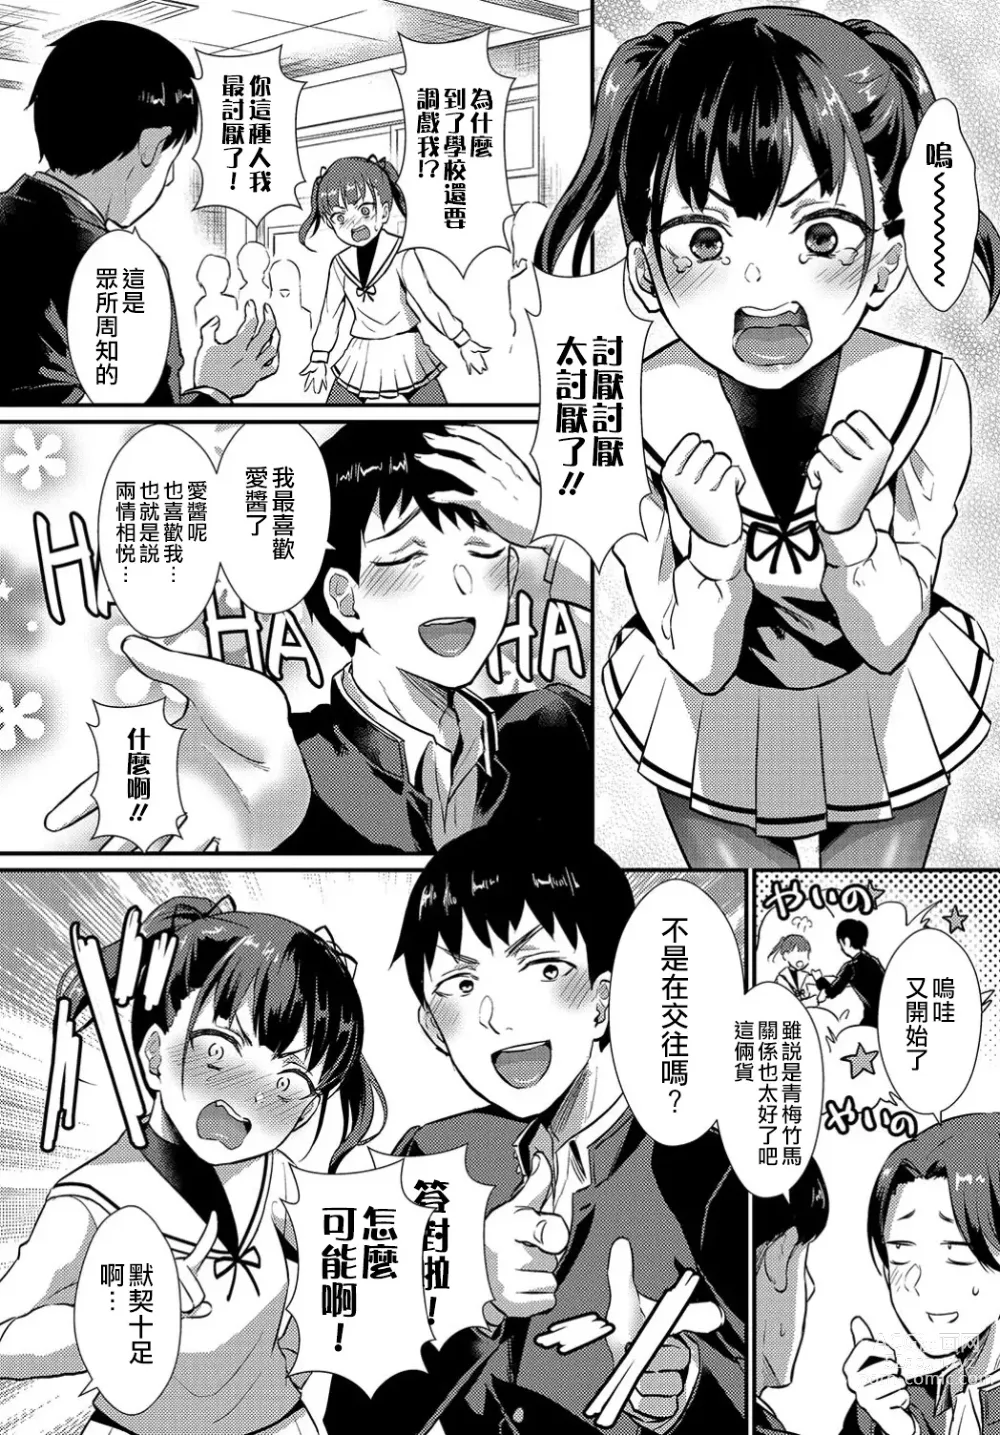 Page 27 of manga Otome Initiative - Girls Initiative (uncensored)